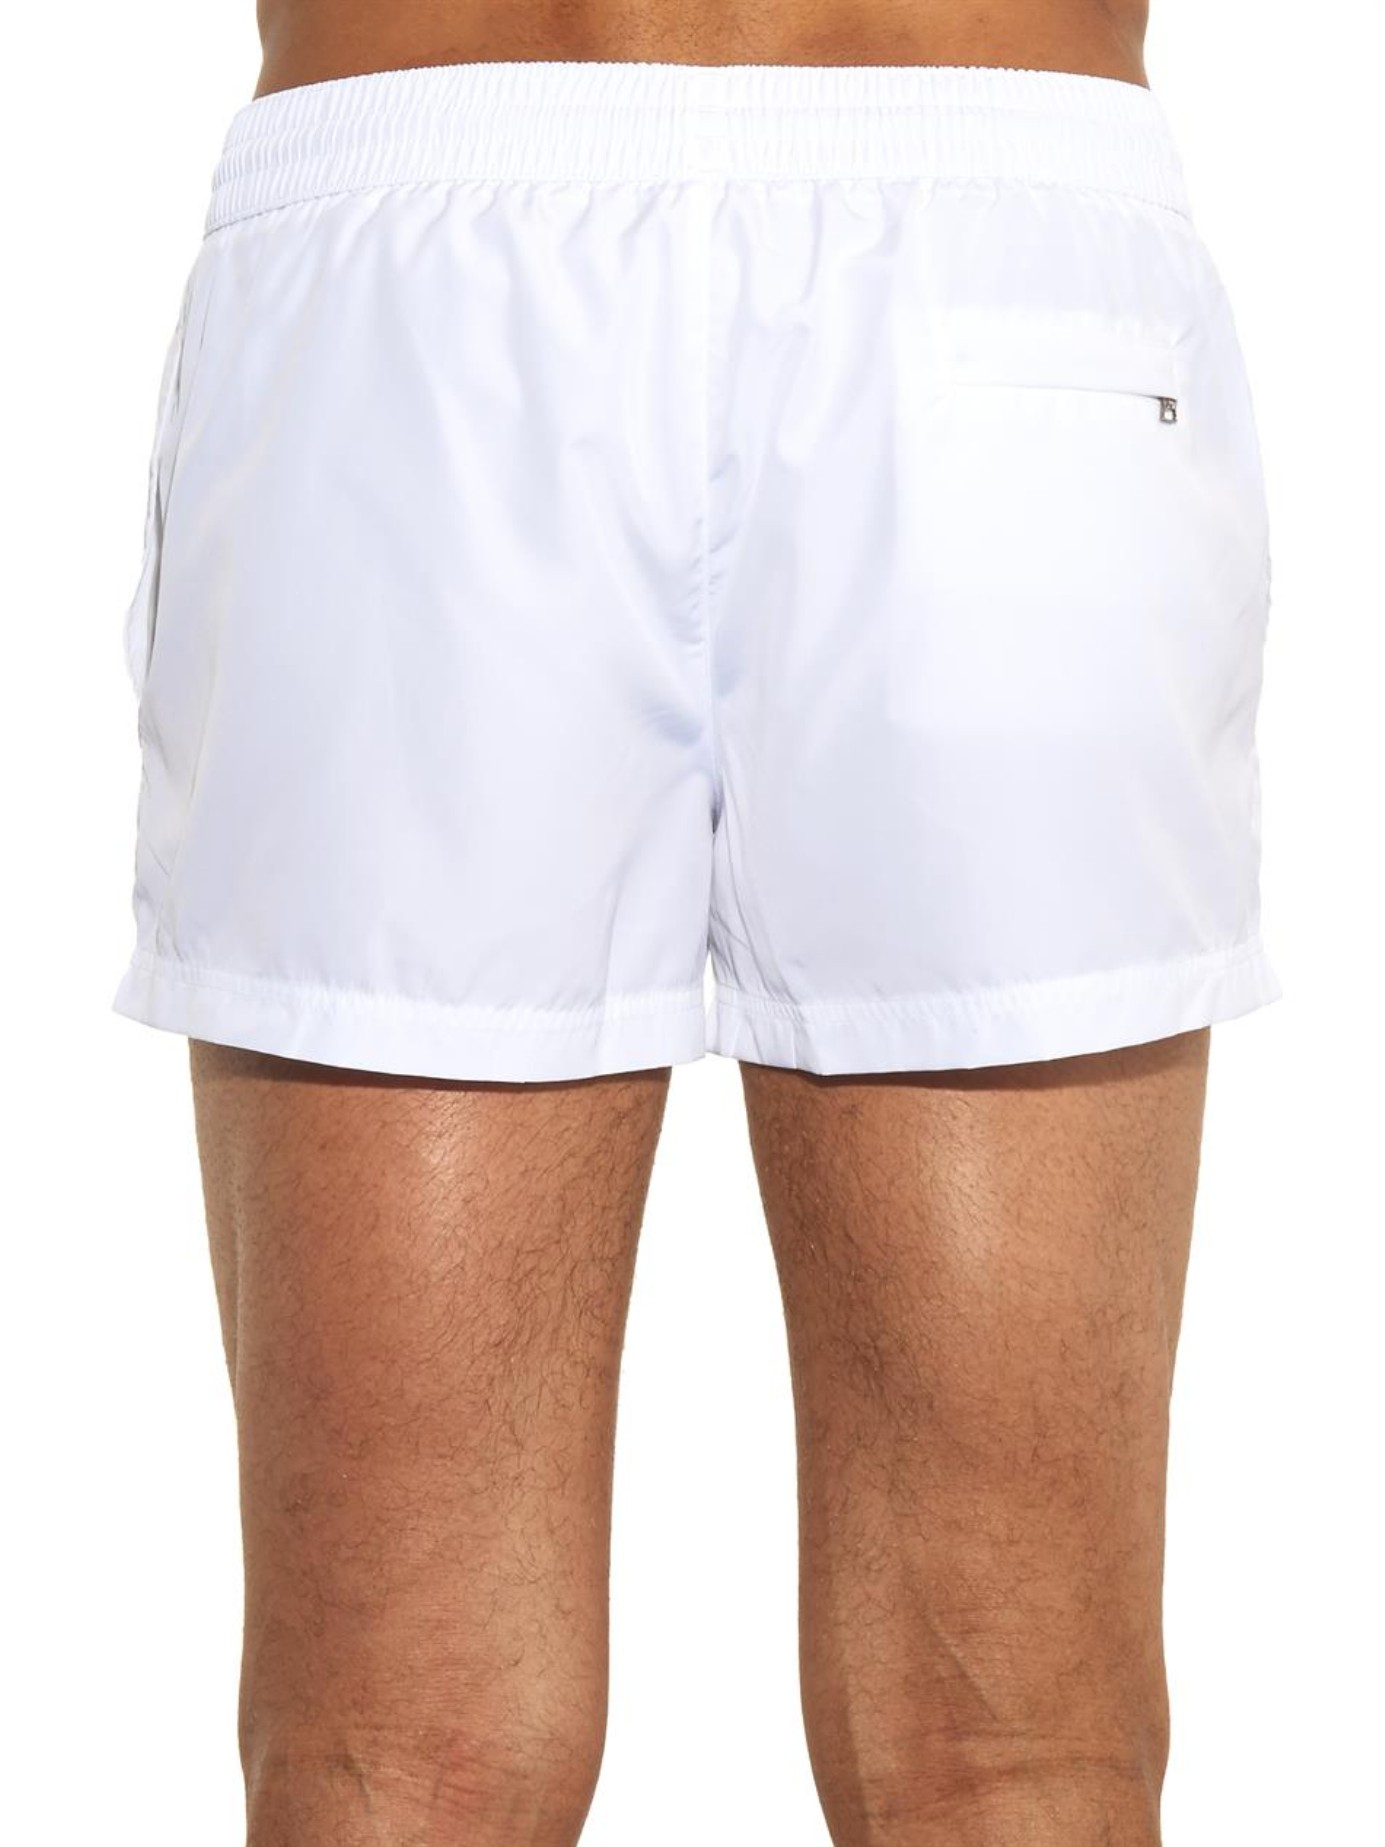 Lyst - Dolce & Gabbana Crest-Embroidered Swim Shorts in White for Men